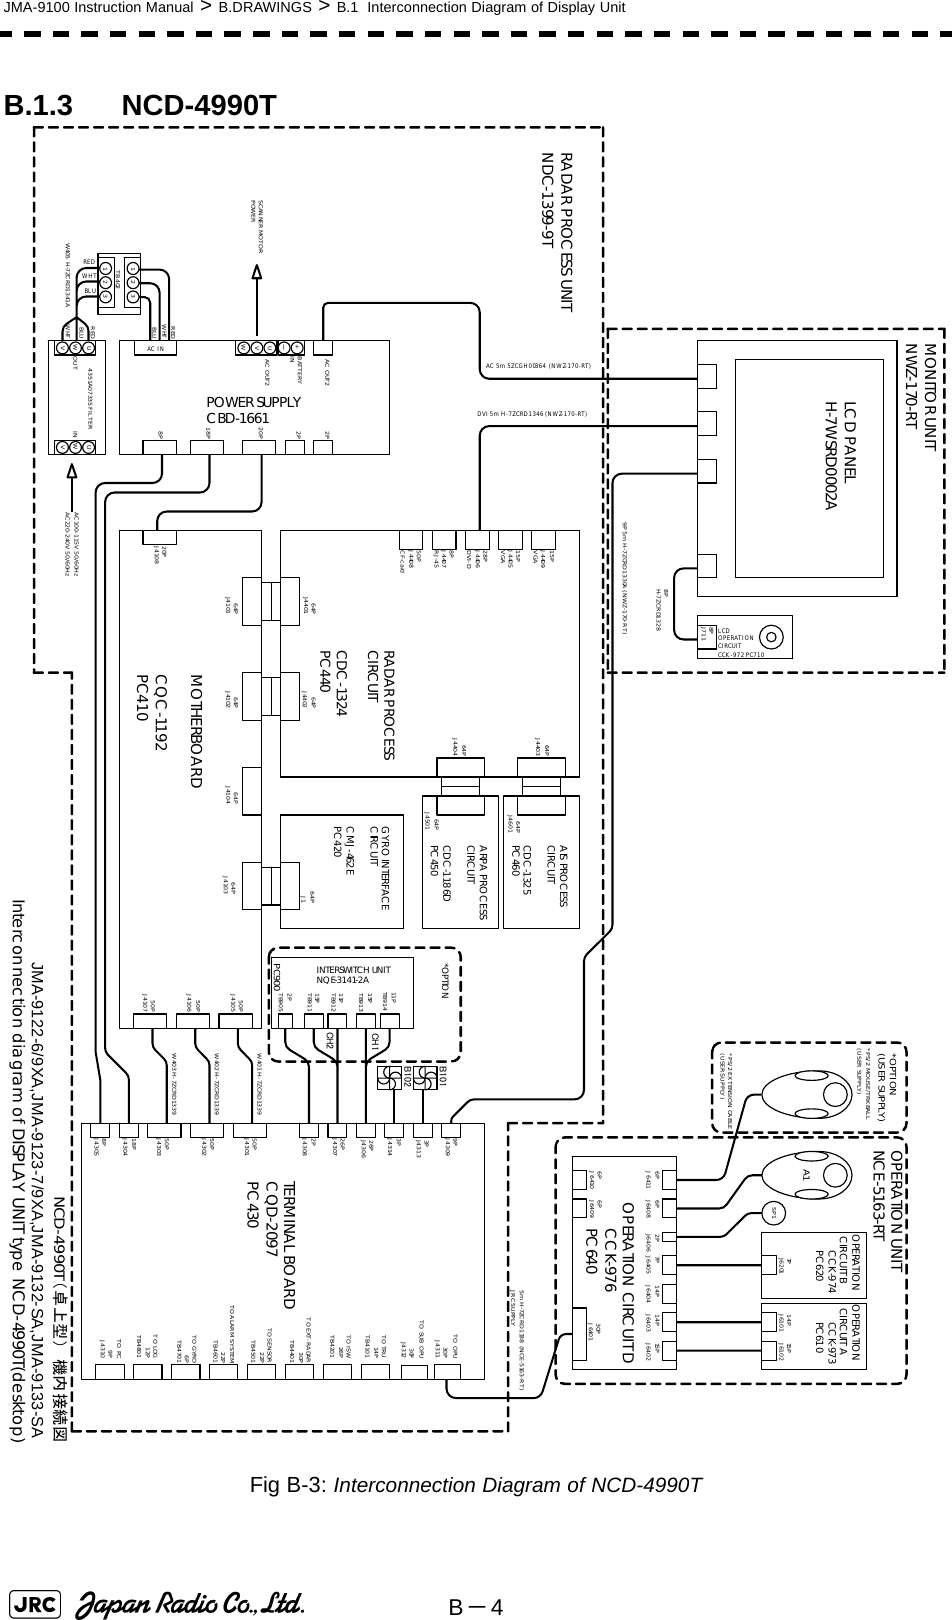 B－4JMA-9100 Instruction Manual &gt; B.DRAWINGS &gt; B.1  Interconnection Diagram of Display UnitB.1.3 NCD-4990TFig B-3: Interconnection Diagram of NCD-4990T2PJ430826PJ430726PJ430650PJ430118PJ43048PJ43053PJ43133PJ43149PJ430914PTB4101TO TRUTO ISW26PTB4201TO EXT-RADAR30PTB4401TO S ENSOR22PTB4501TO A LARM  SYSTEM22PTB4601TO GYRO6PTB4701TO LOG12PTB4801TO PC9PJ4310TERMINAL BOARDCQD-2097PC43050PJ430250PJ430330PJ4311TO OPU30PJ4312TO SUB OPU6PJ64116PJ6410 6PJ64096PJ6408 2PJ6406 7PJ6405 14PJ6404 14PJ6403 15PJ640230PJ6401OPERATION CIRCUIT D      CCK-976      PC64014PJ6101 15PJ6102OPERATION  CIRCUIT A      CCK-973      PC6107PJ6201OPERATION  CIRCUIT B      CCK-974      PC620SP1A1*PS/2 EX TENSION  CA BLE(USER SUPPLY )OPERATION UNITNCE-5163-RT5m H -7ZC RD 1 33 8  (N CE - 5 163 - R T)JRC SU PPLYB101B102PC90011PTB91415PTB91311PTB91215PTB9112PTB905INTERSWITCH UNITNQE-3141-2ACH1CH250PJ410550PJ410650PJ4107*OPTIONW401 H -7ZCRD1339W402 H -7ZCRD1339W403 H -7ZCRD133964PJ410364PJ410464PJ410264PJ410164PJ4401 64PJ4402 64PJ1GYRO INTERFACECIRCUITCMJ-462EPC420RADAR PROCESSCIRCUITCDC-1324PC440MOTHERBOARDCQC-1192PC41064PJ440364PJ4404AIS PROCESSCIRCUITCDC-1325PC46064PJ460164PJ4501ARPA PROCESSCIRCUITCDC-1186DPC45015PJ4409VGA15PJ4405VGA28PJ4406DVI-D8PJ4407RJ-4550PJ4408CF-cardLCDOPERATIONCIRCUITCCK -972 PC71 08PJ711MONITOR UNITNWZ-170-RTLCD PANELH-7WSRD0002A8PH-7ZCRD13289P 5m  H-7ZCRD1330A  (NWZ-170-R T)DVI 5m  H-7ZCRD1346 (NWZ-170-RT)20PJ41088PPOWER SUPPLYCBD-166118P20P*PS/2 MOUSE/TRKBALL(USER SUPPLY)*OPTION(USER SUPPLY)2P2PAC OUT2+ーUVWBATTERYINAC OUT2AC INUWVUWV4351A07335 FILTERINOUTREDWHTBLUREDWHTBLUAC 5m 5ZCGH00364 (NWZ-170-RT)AC100-115V 50/60HzAC220-240V 50/60HzSCANNER MOTORPOWERNCD-4990T（卓上型）　機内接続図Interconnection diagram of DISPLAY UNIT type NCD-4990T(desktop)RADAR PROCESS UNITNDC-1399-9T1 2 31 2 3REDBLUWHTW405 H-7ZCRD1341ATB402JMA-9122-6/9XA,JMA-9123-7/9XA,JMA-9132-SA,JMA-9133-SA